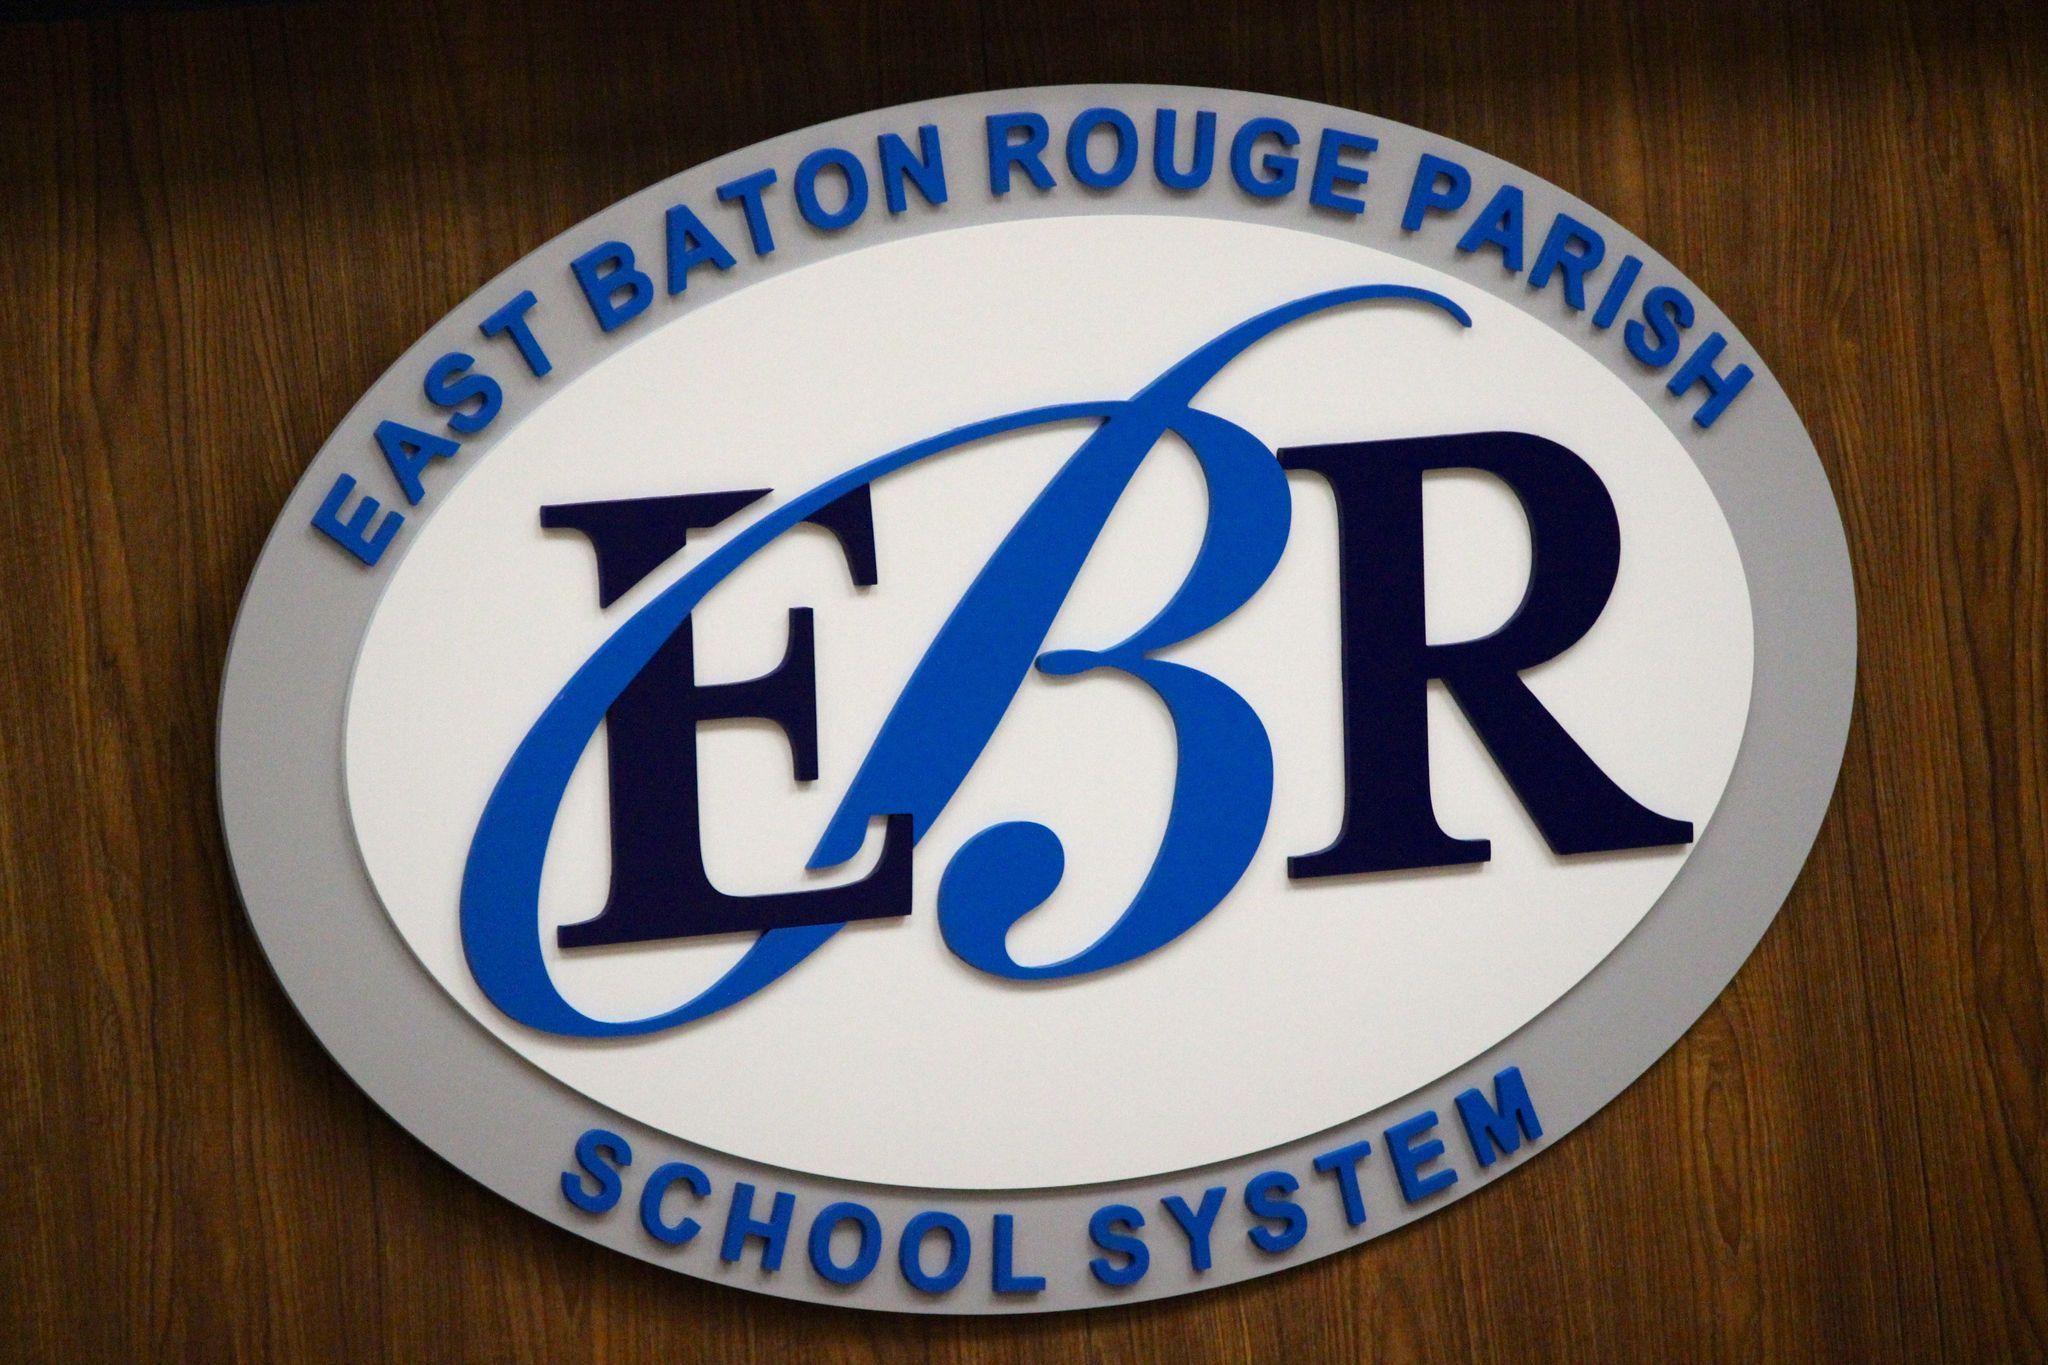 EBR Logo - EBR school survey gets enthusiastic response from parents, less so